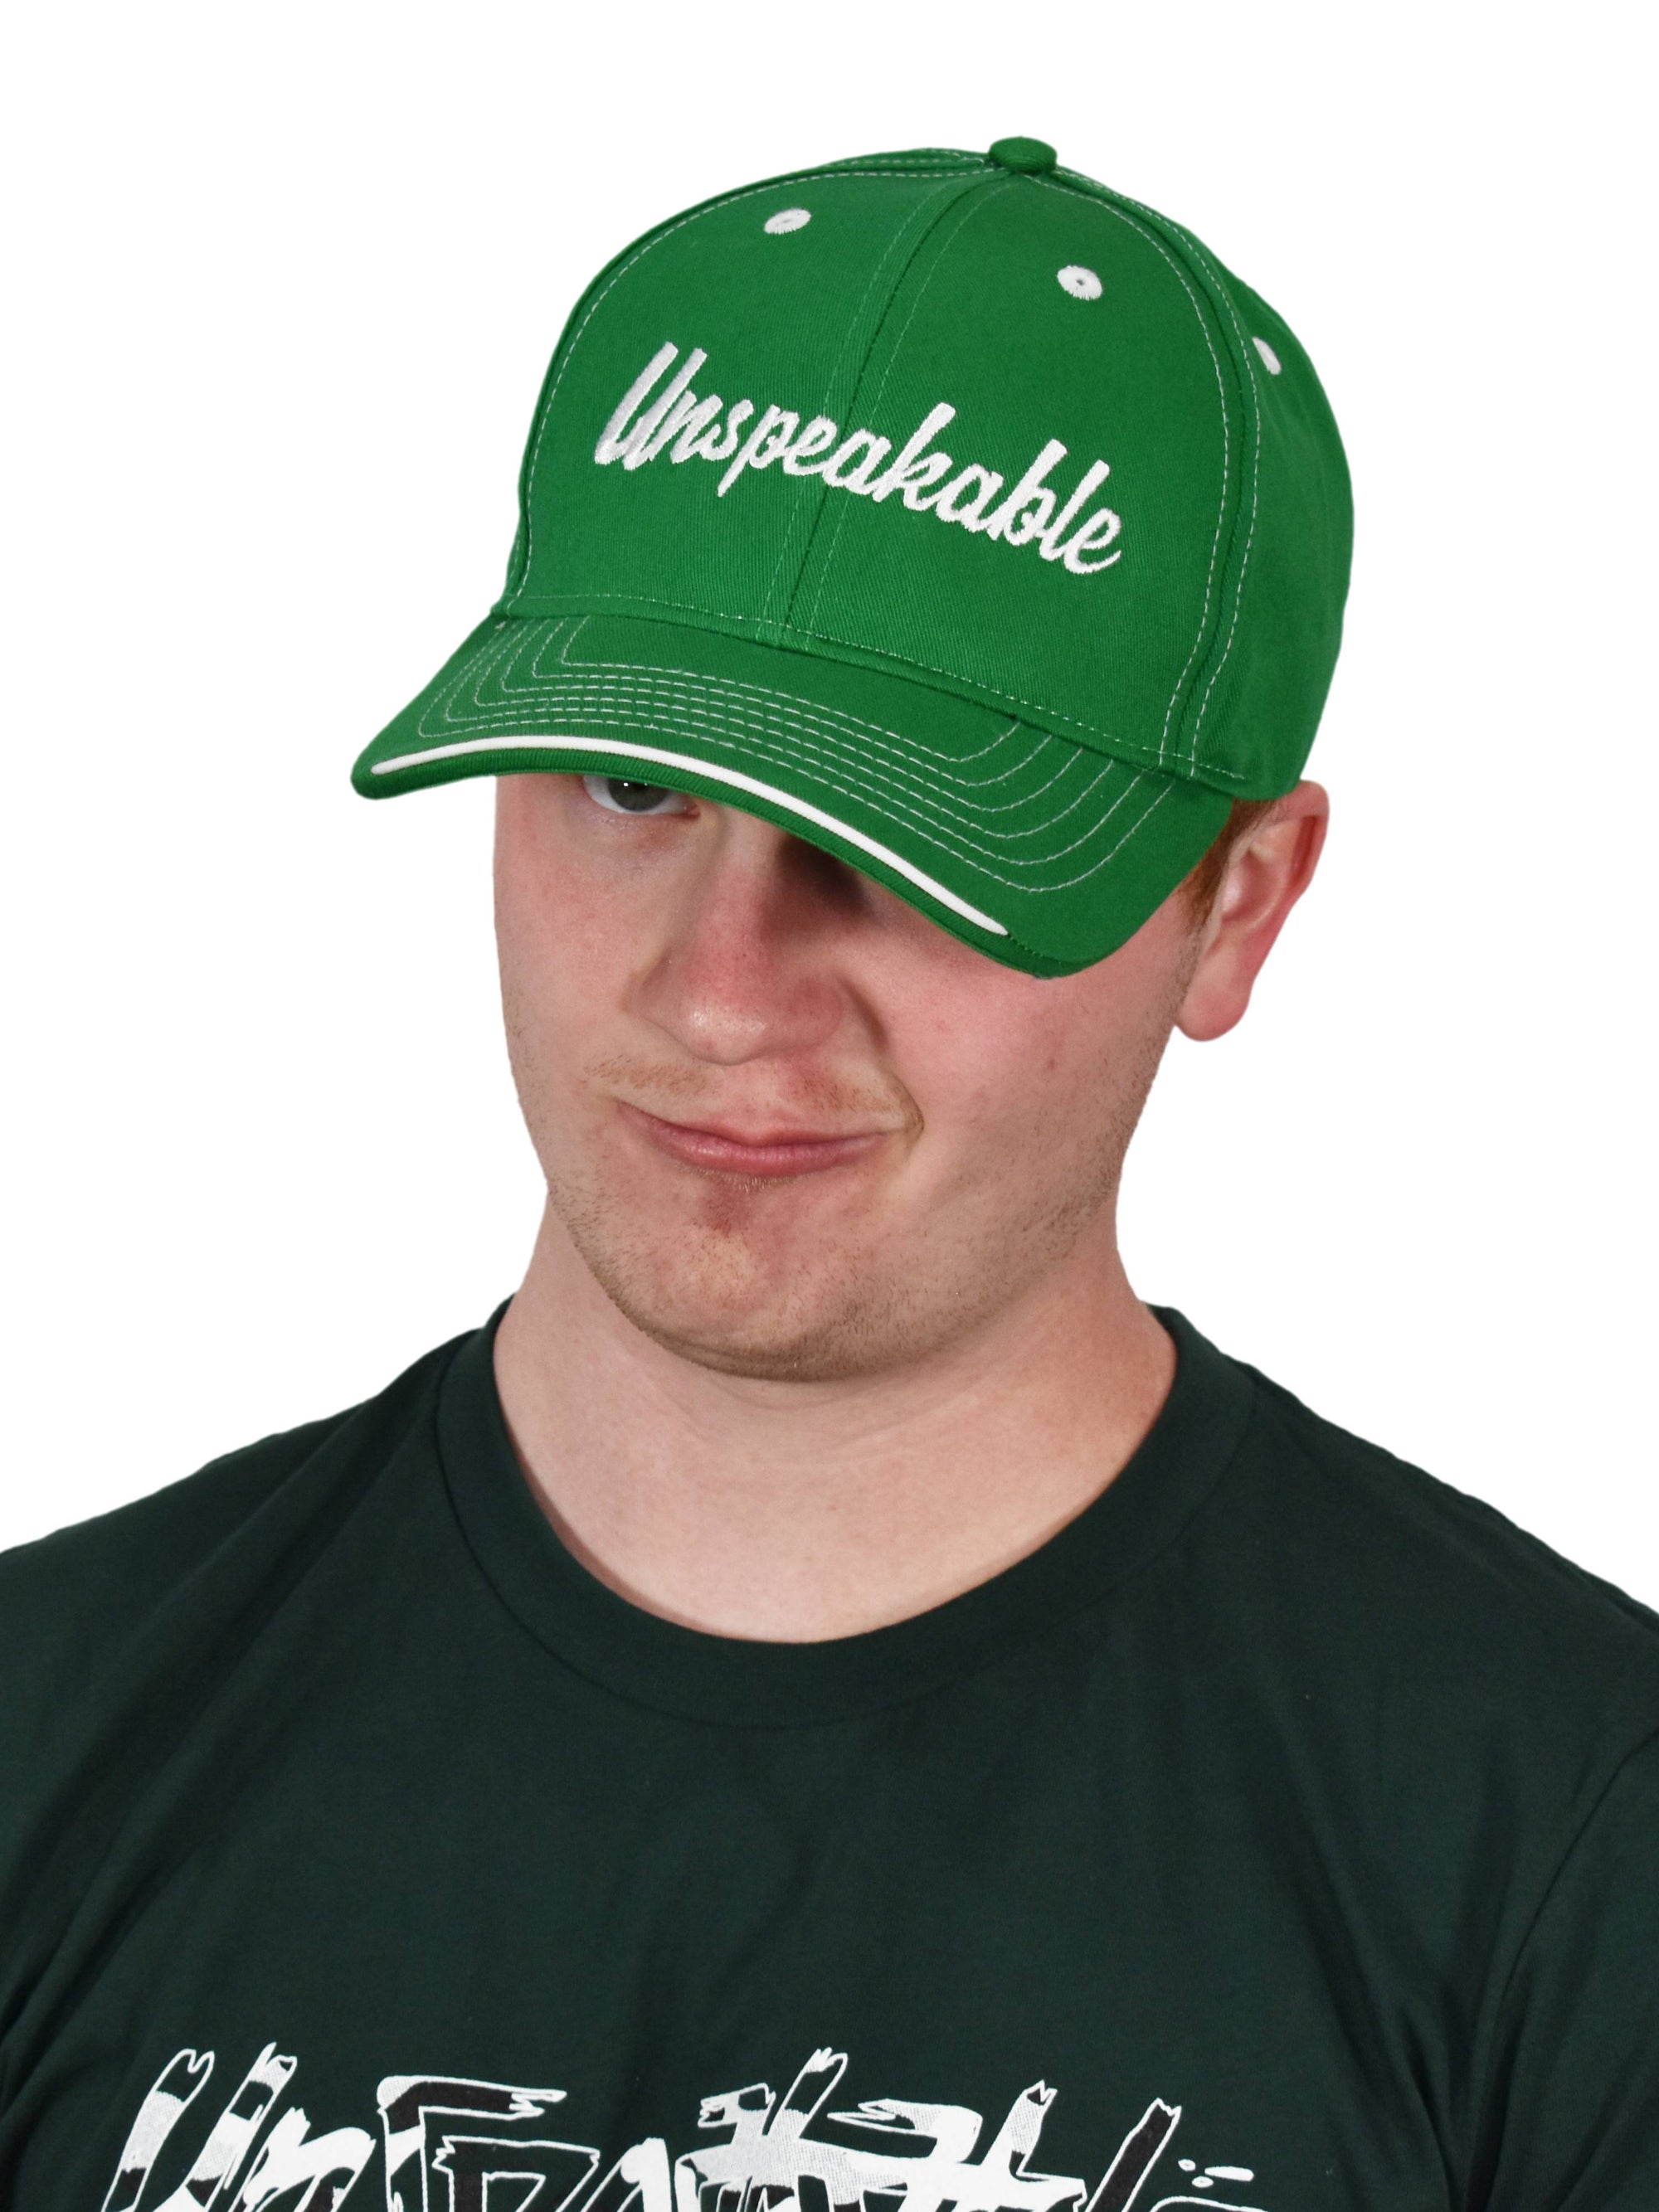 KELLY GREEN HAT w/WHITE FONT - UnspeakableGaming